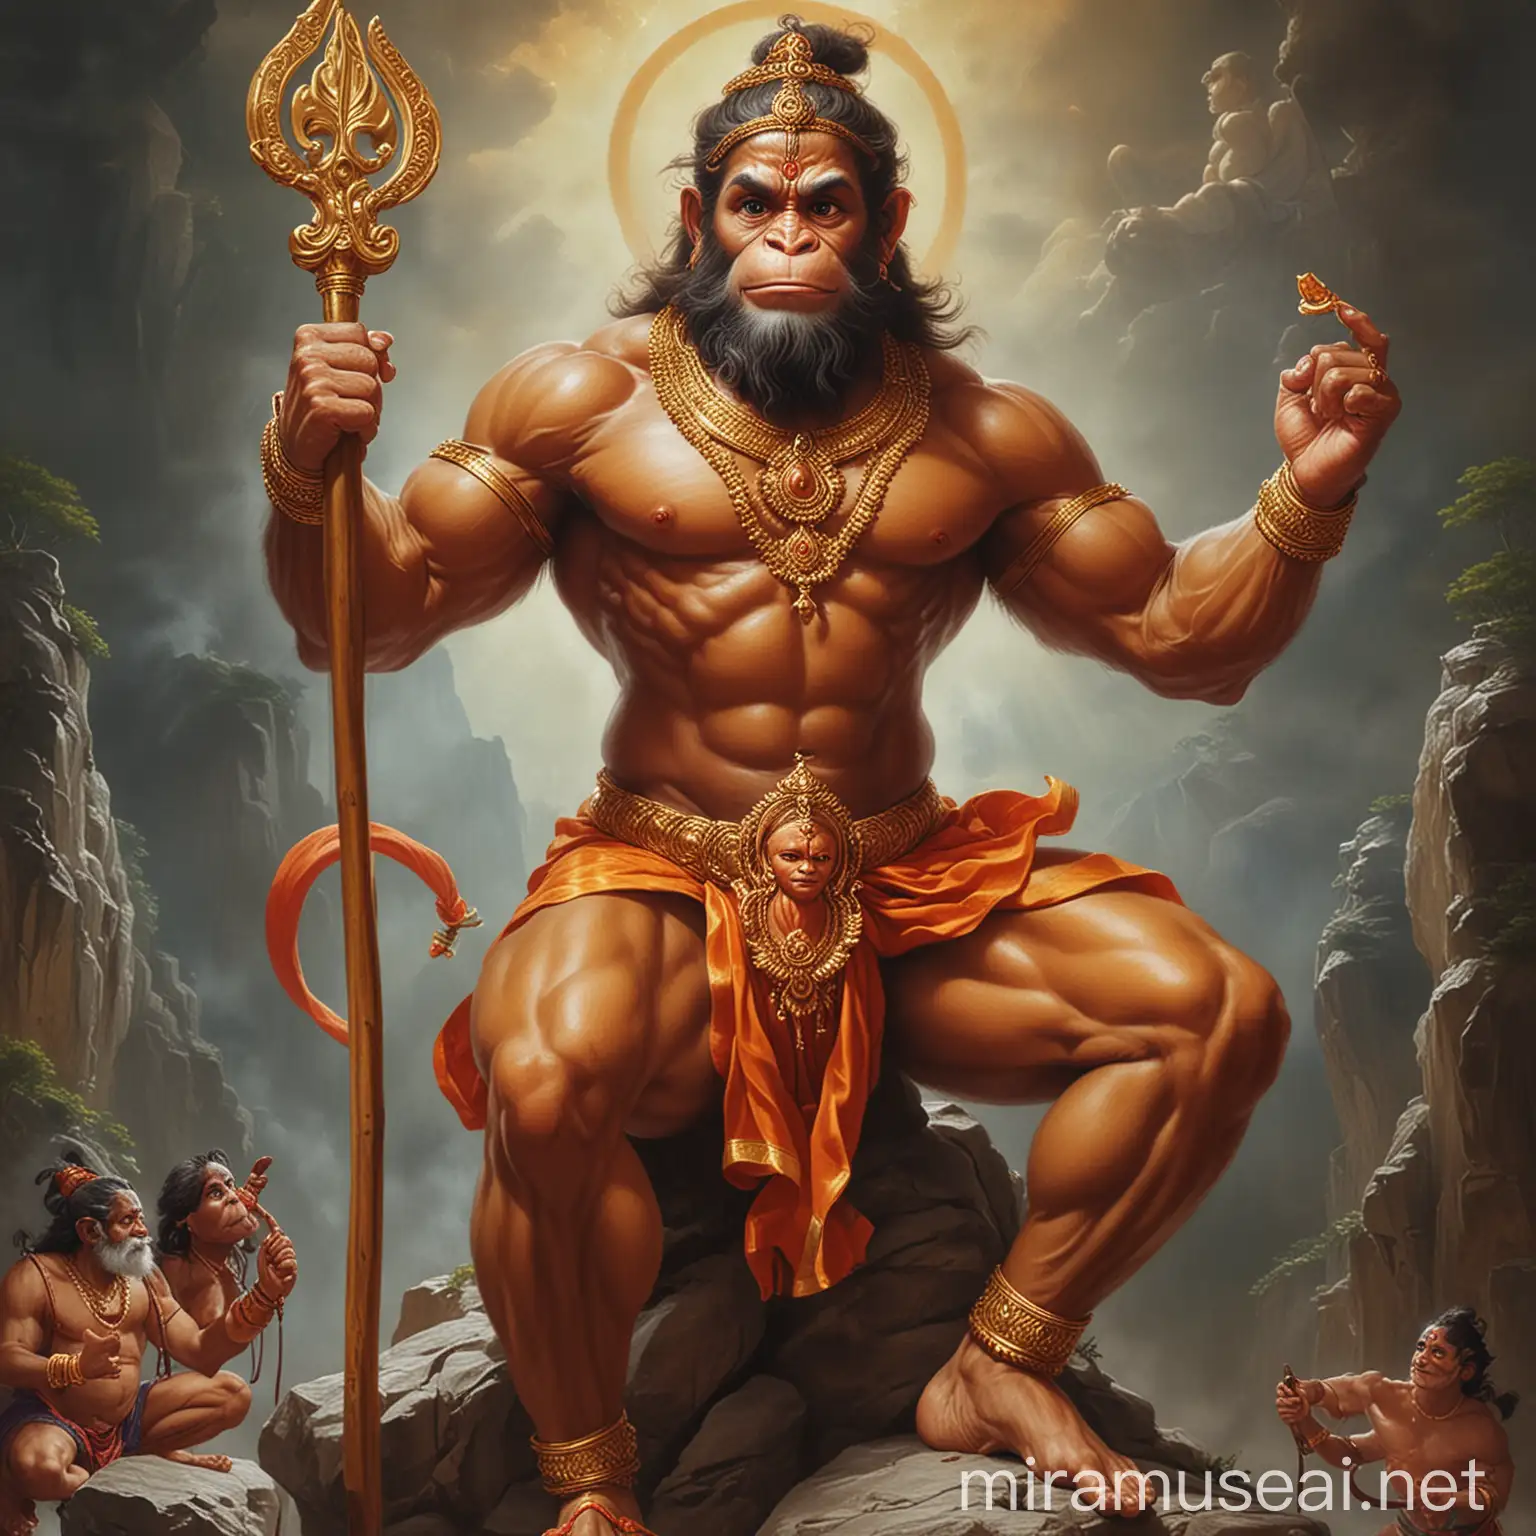 Create a Hollywood movie style poster. main title: "'Me Hu bajrangi Balwan " A picture of God hanuman should be seen inside